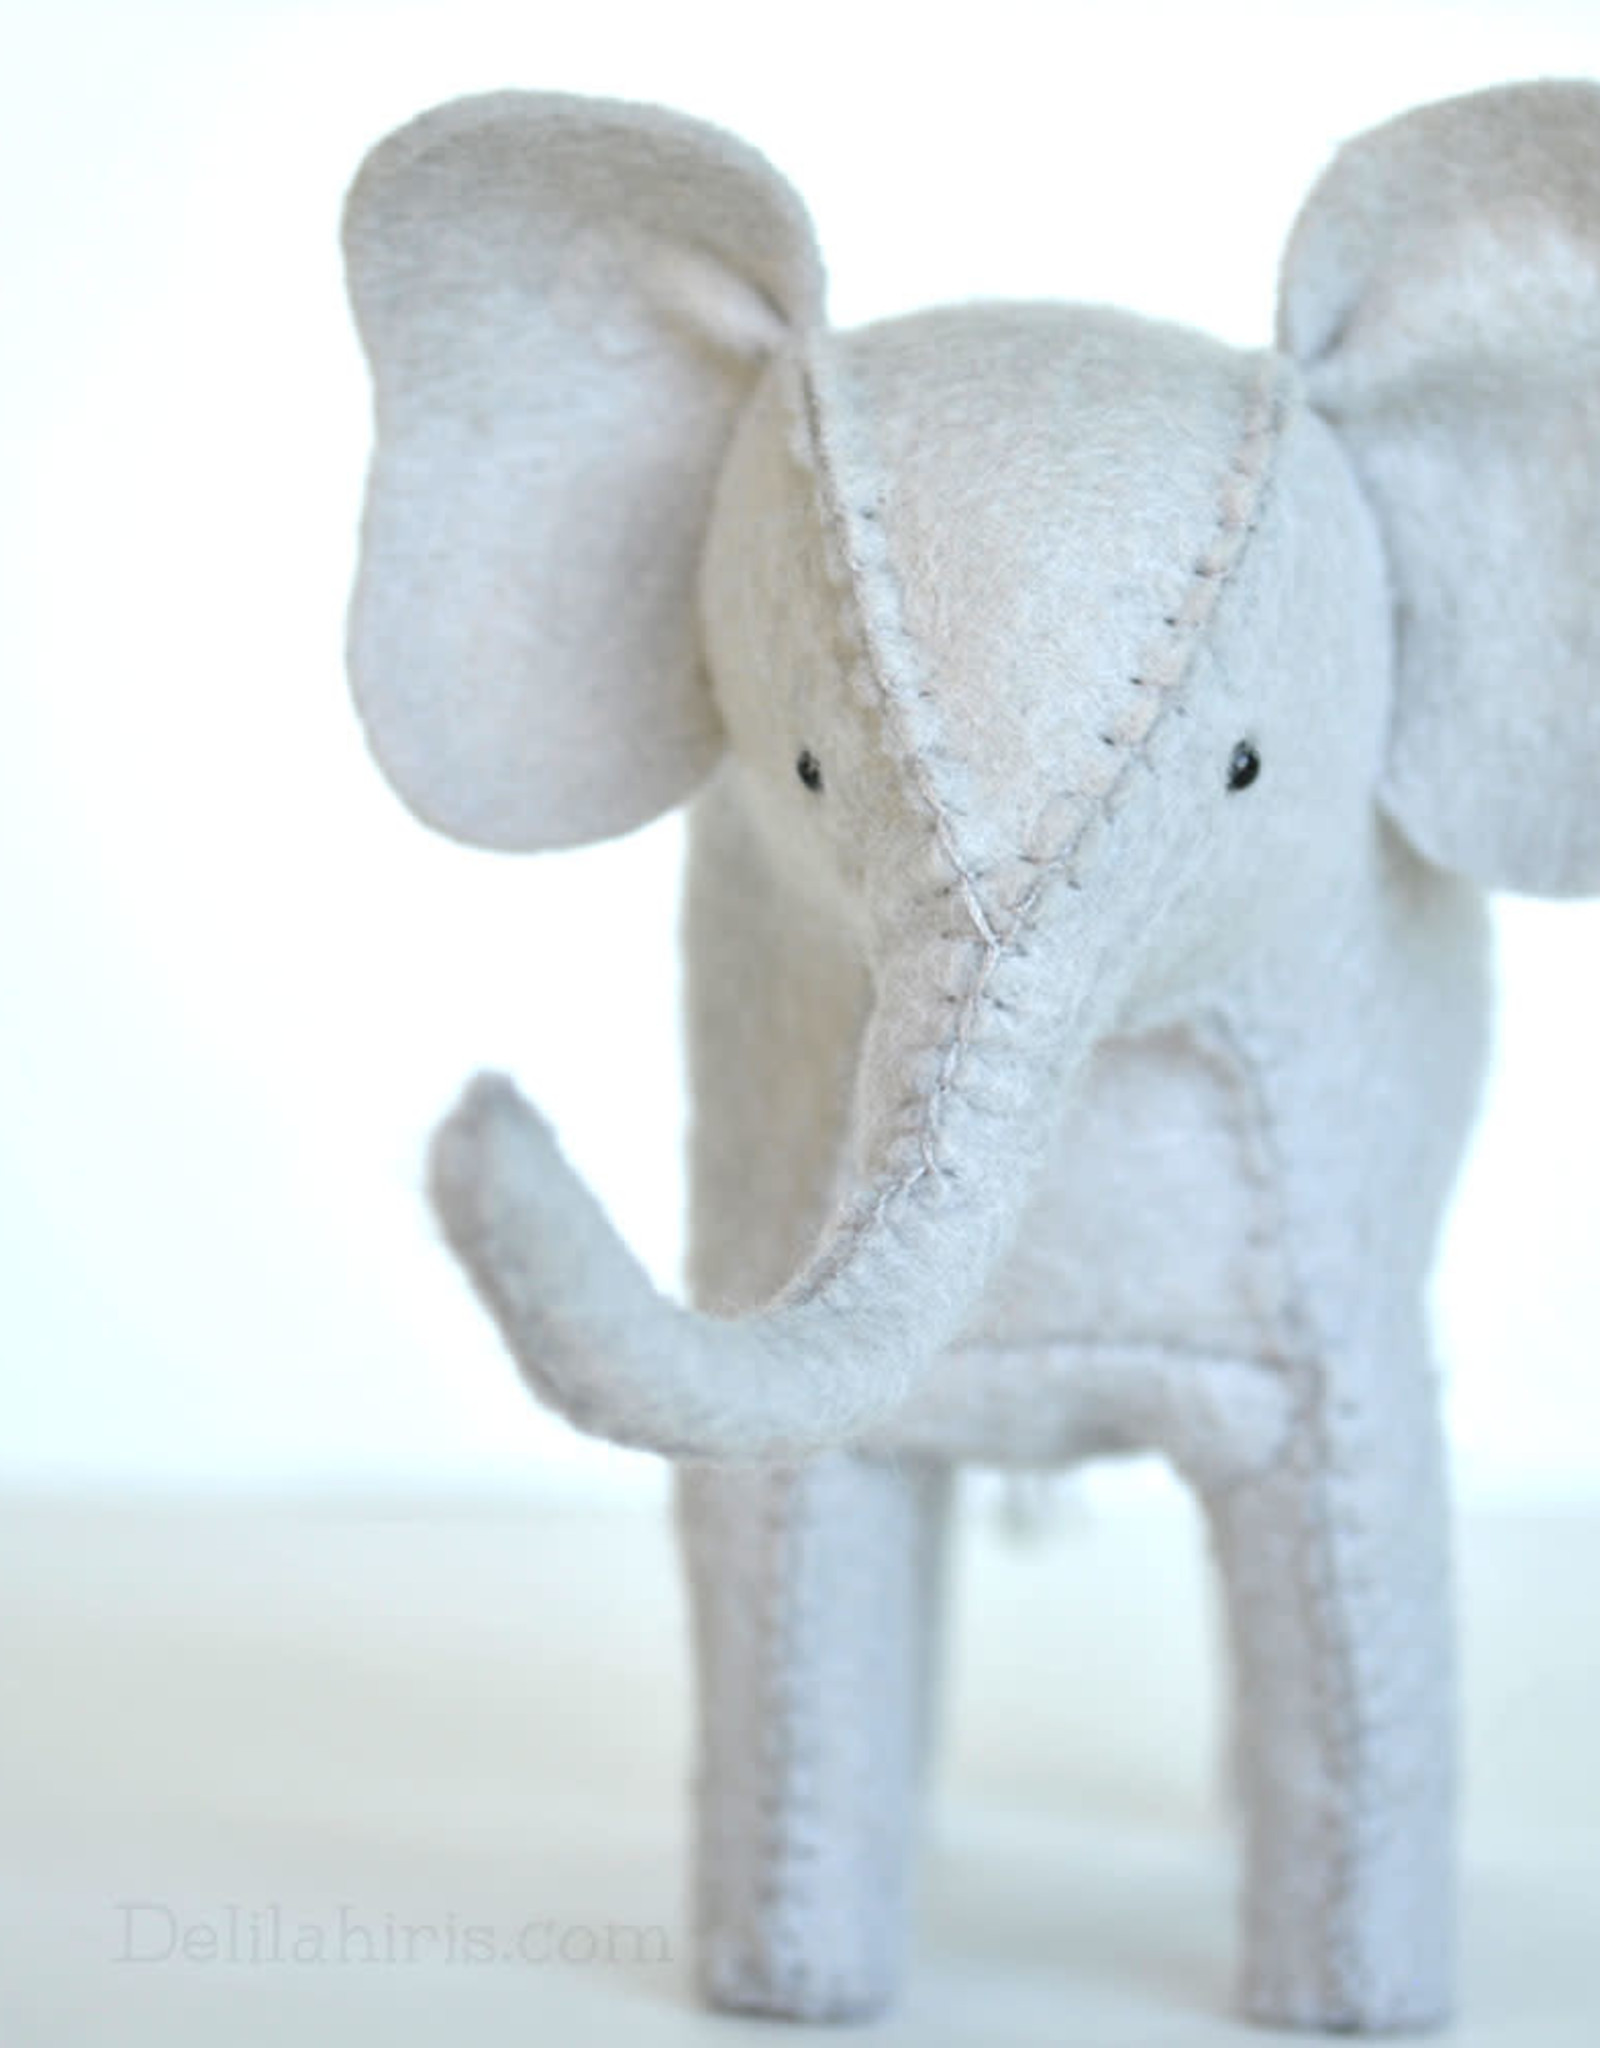 Delilahiris Designs - Stuffed Elephant Se Kit